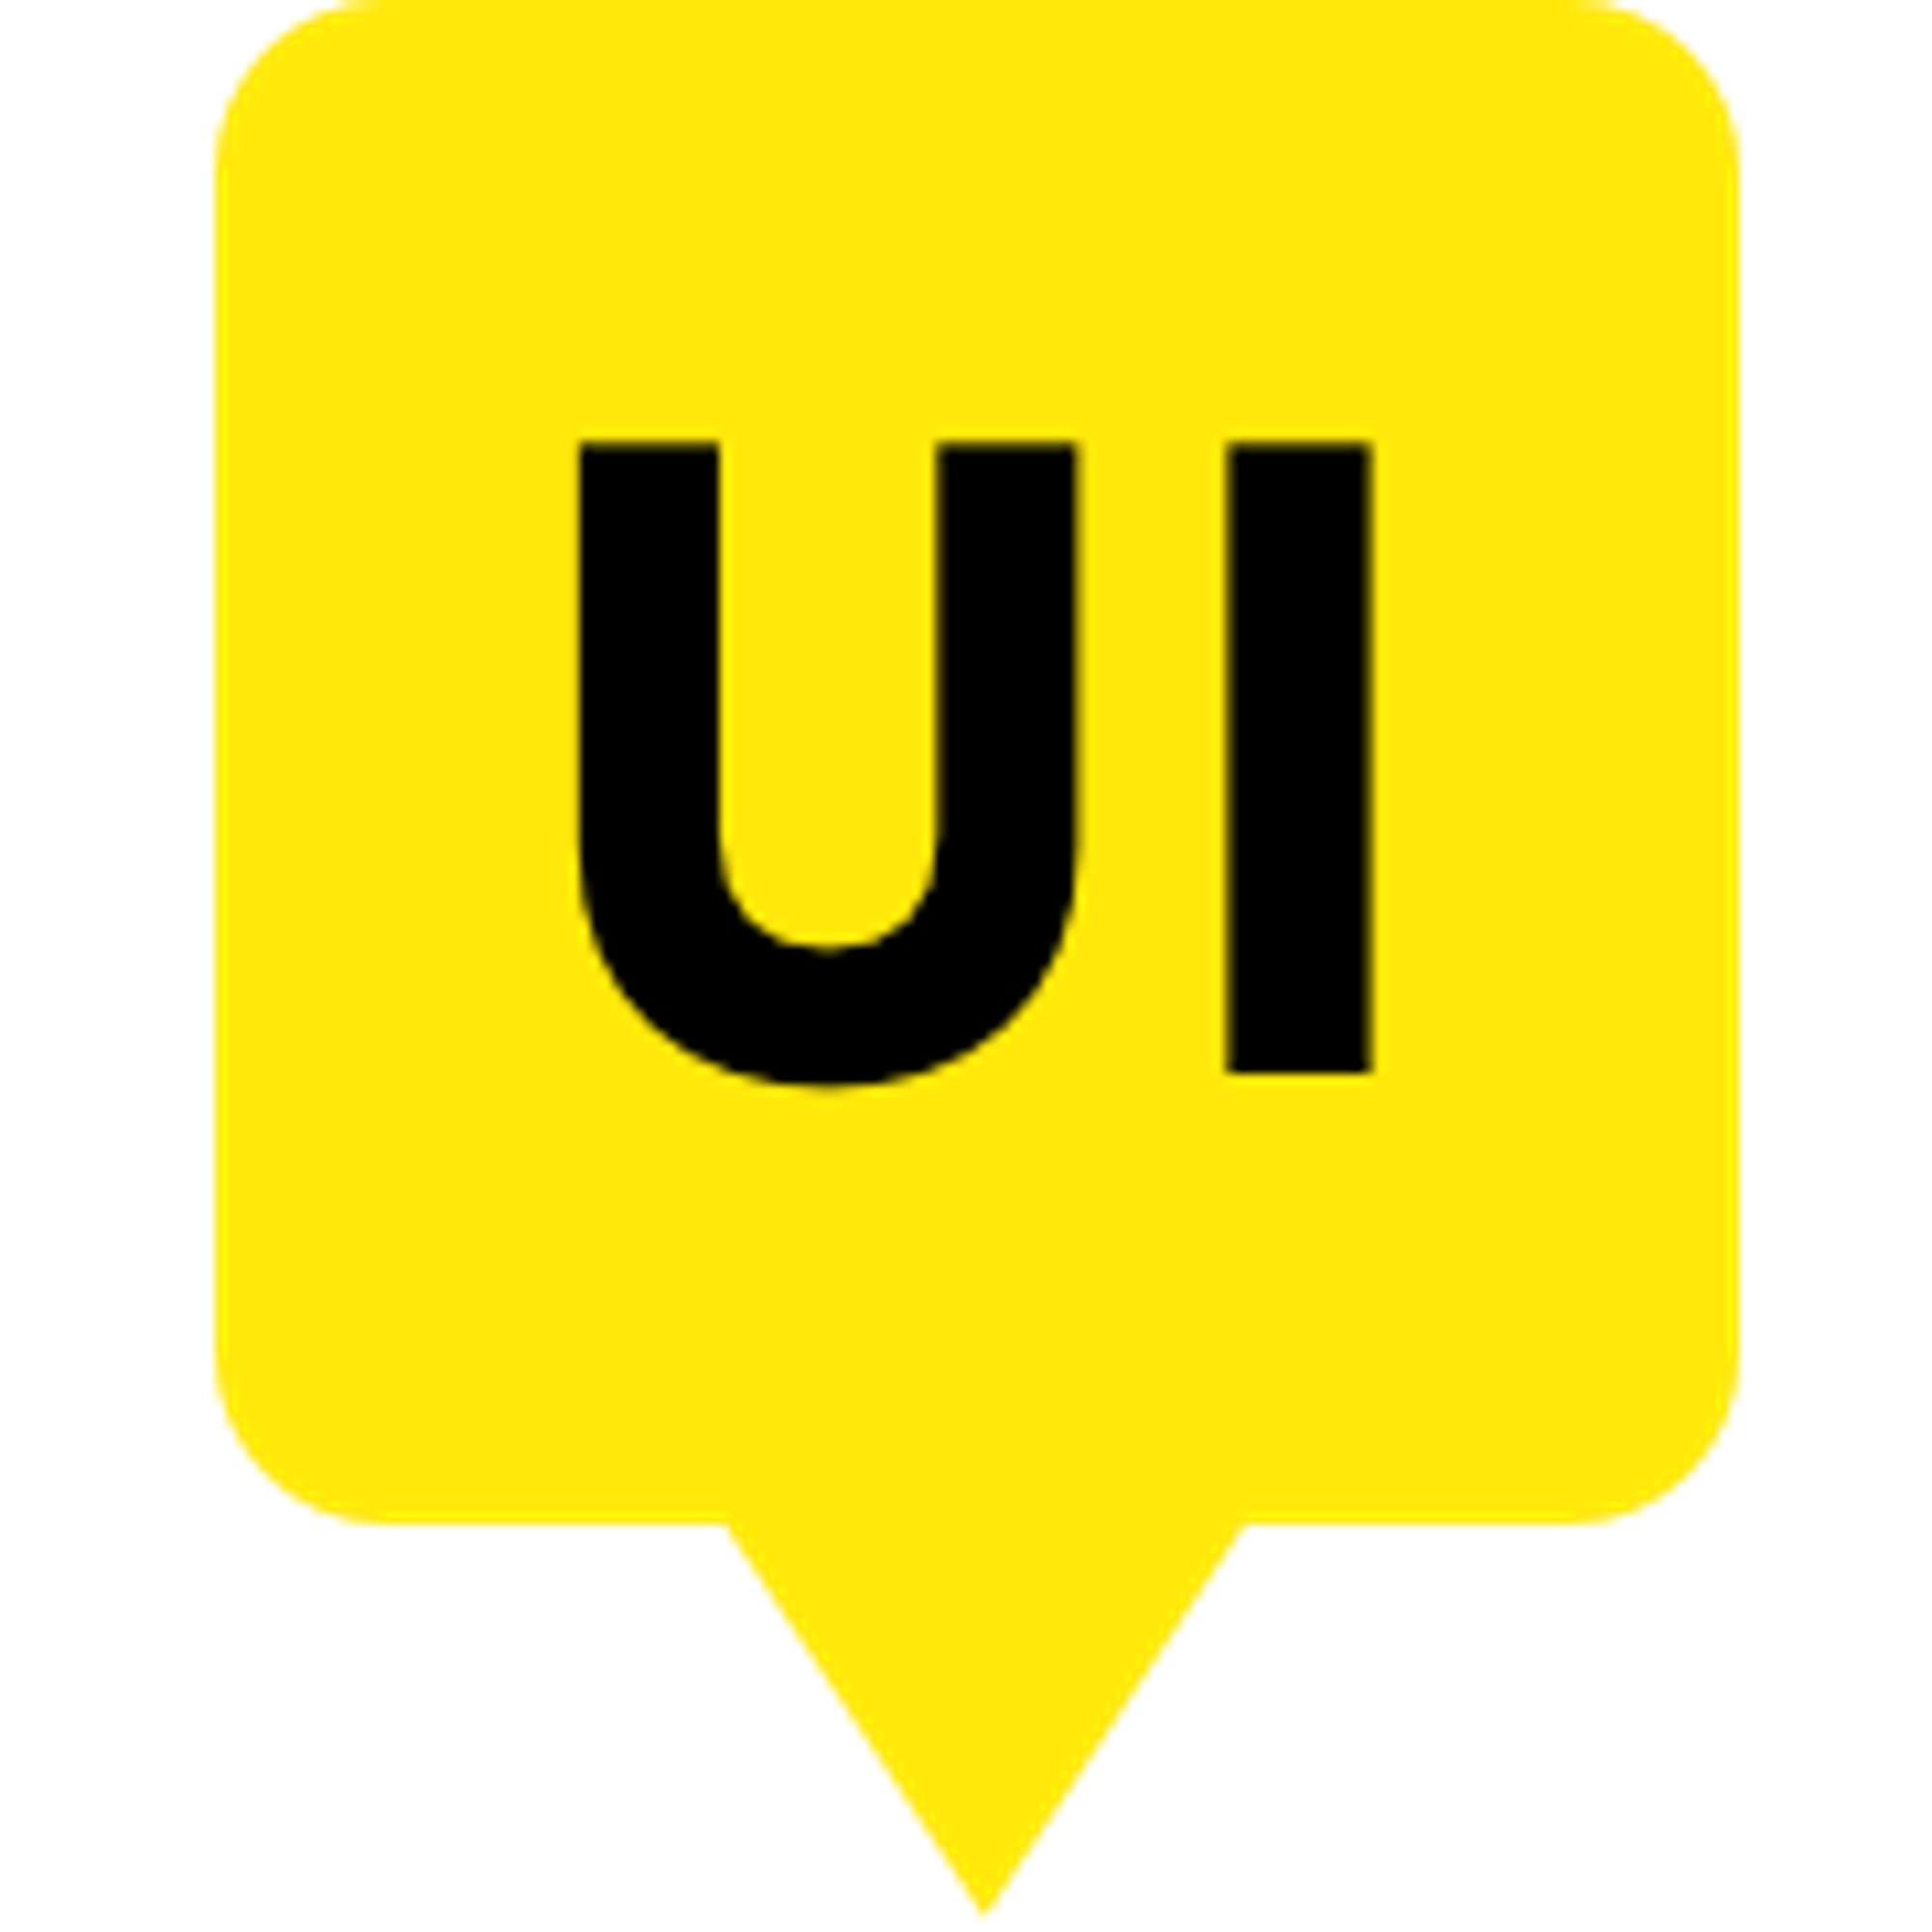 Premium UI Kits - UI Place